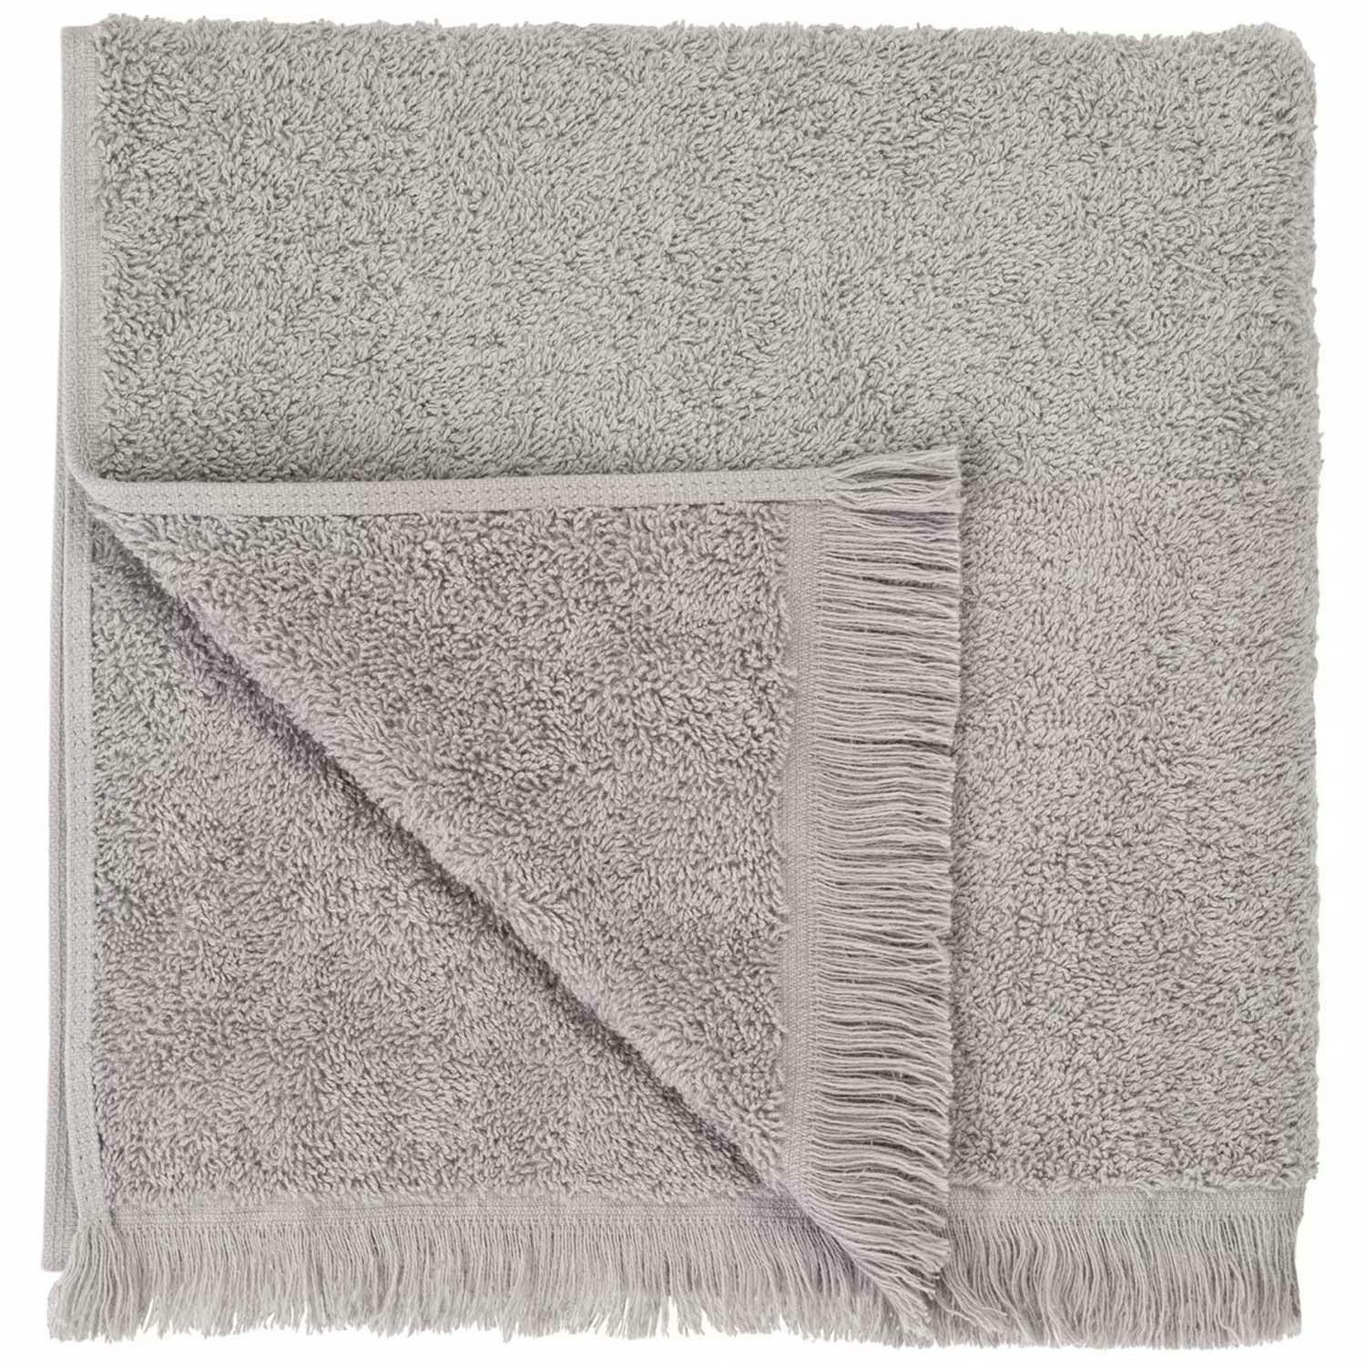 FRINO Towel 50x100 cm, Satellite